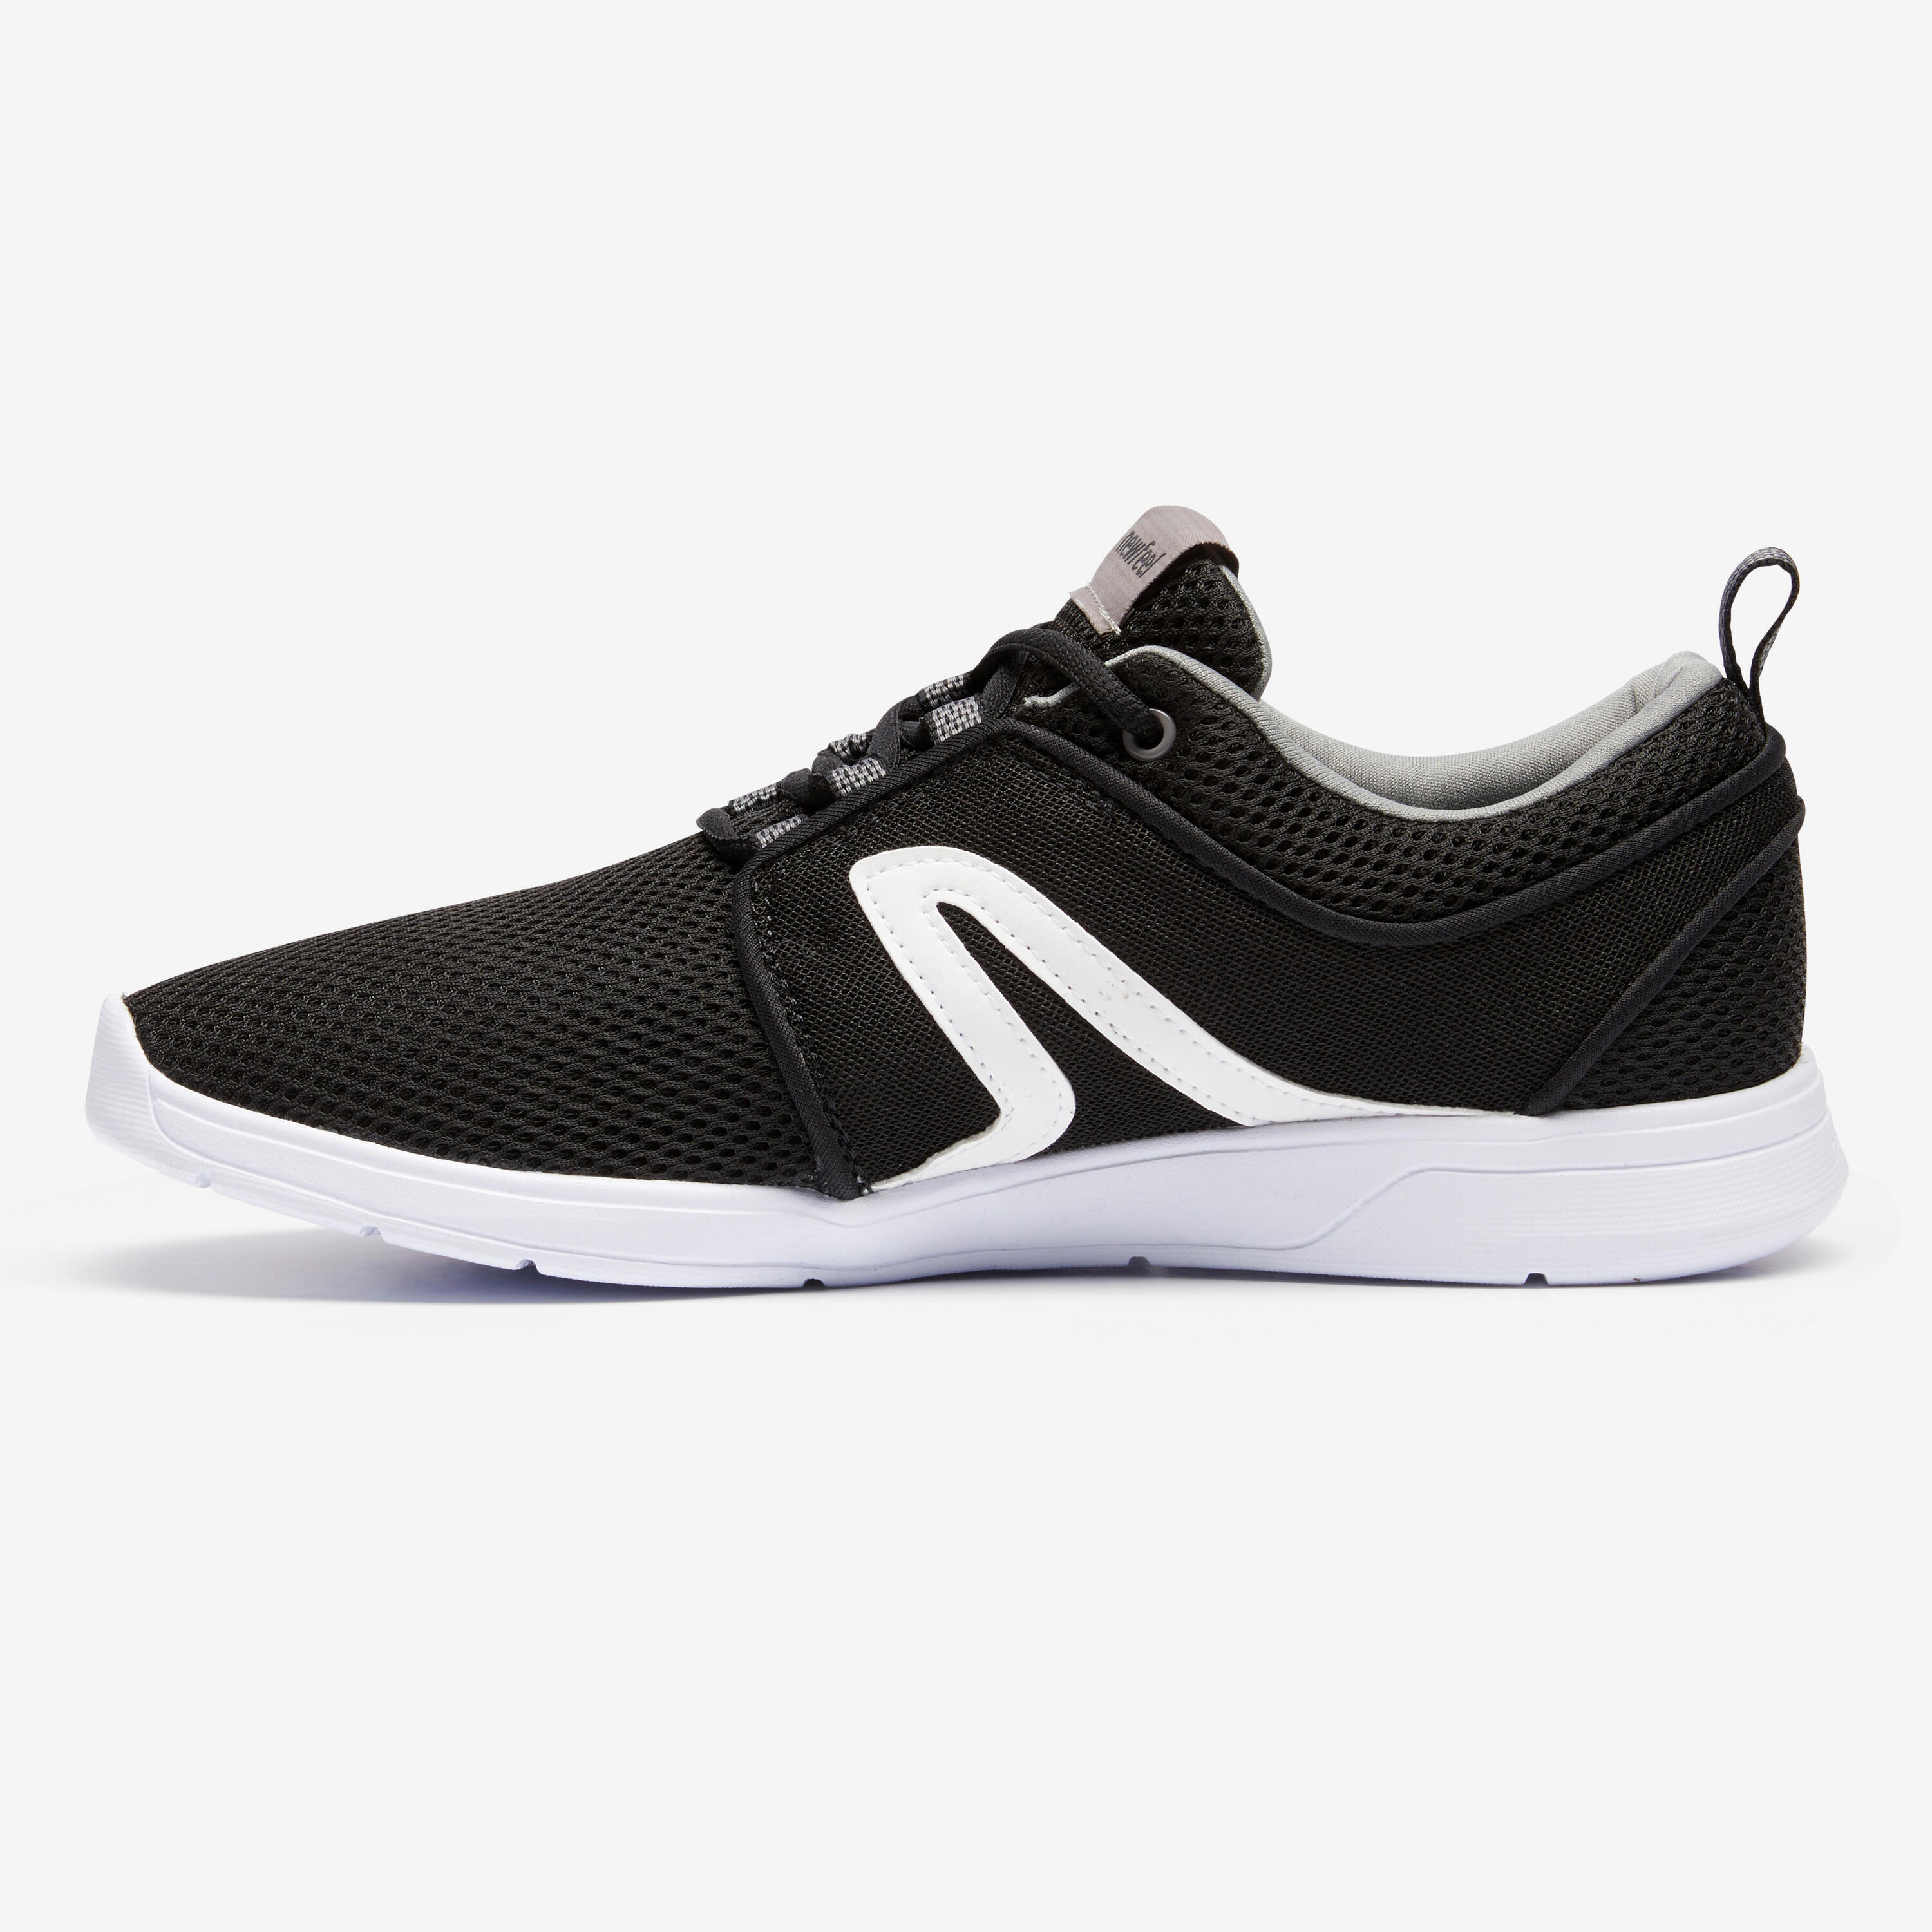 Soft 140 Mesh Men's Urban Walking Shoes - Black/White 2/8